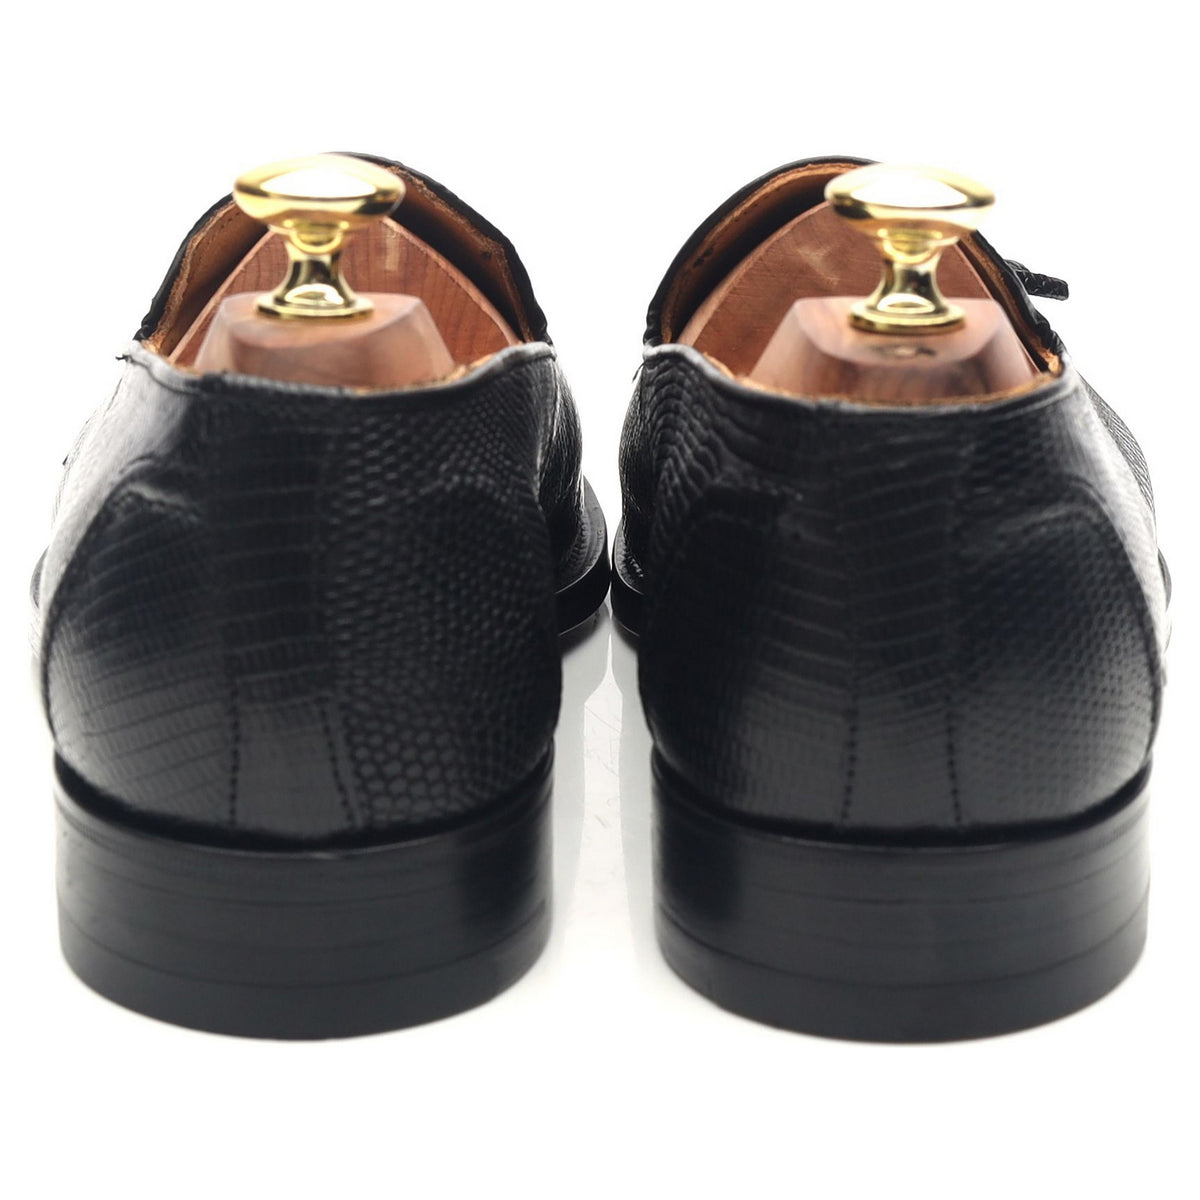 Black Leather Tassel Loafers UK 7